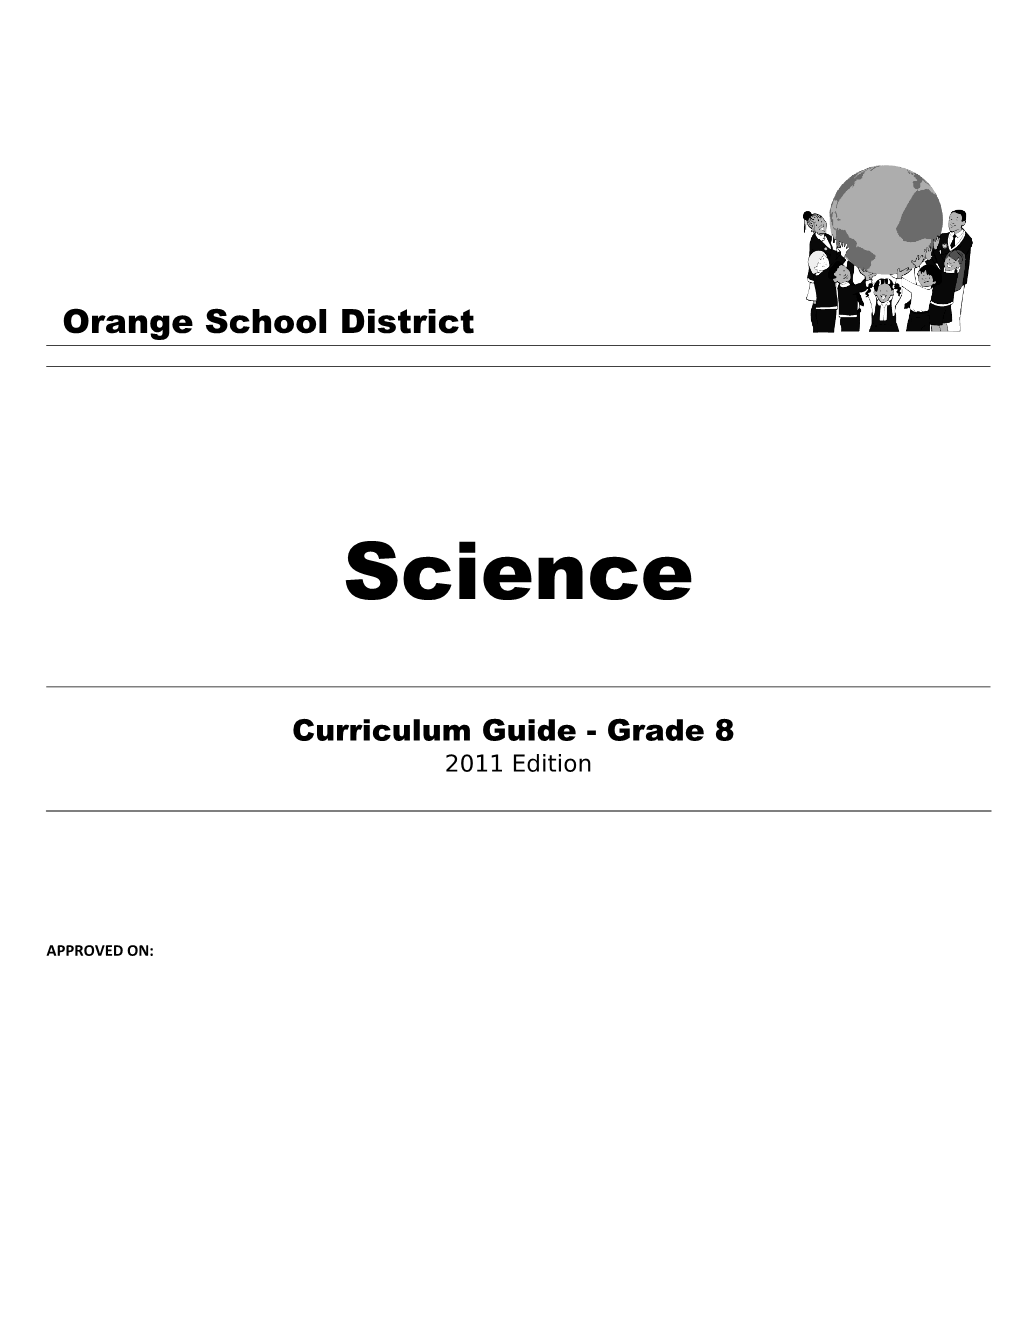 Orange School District s1